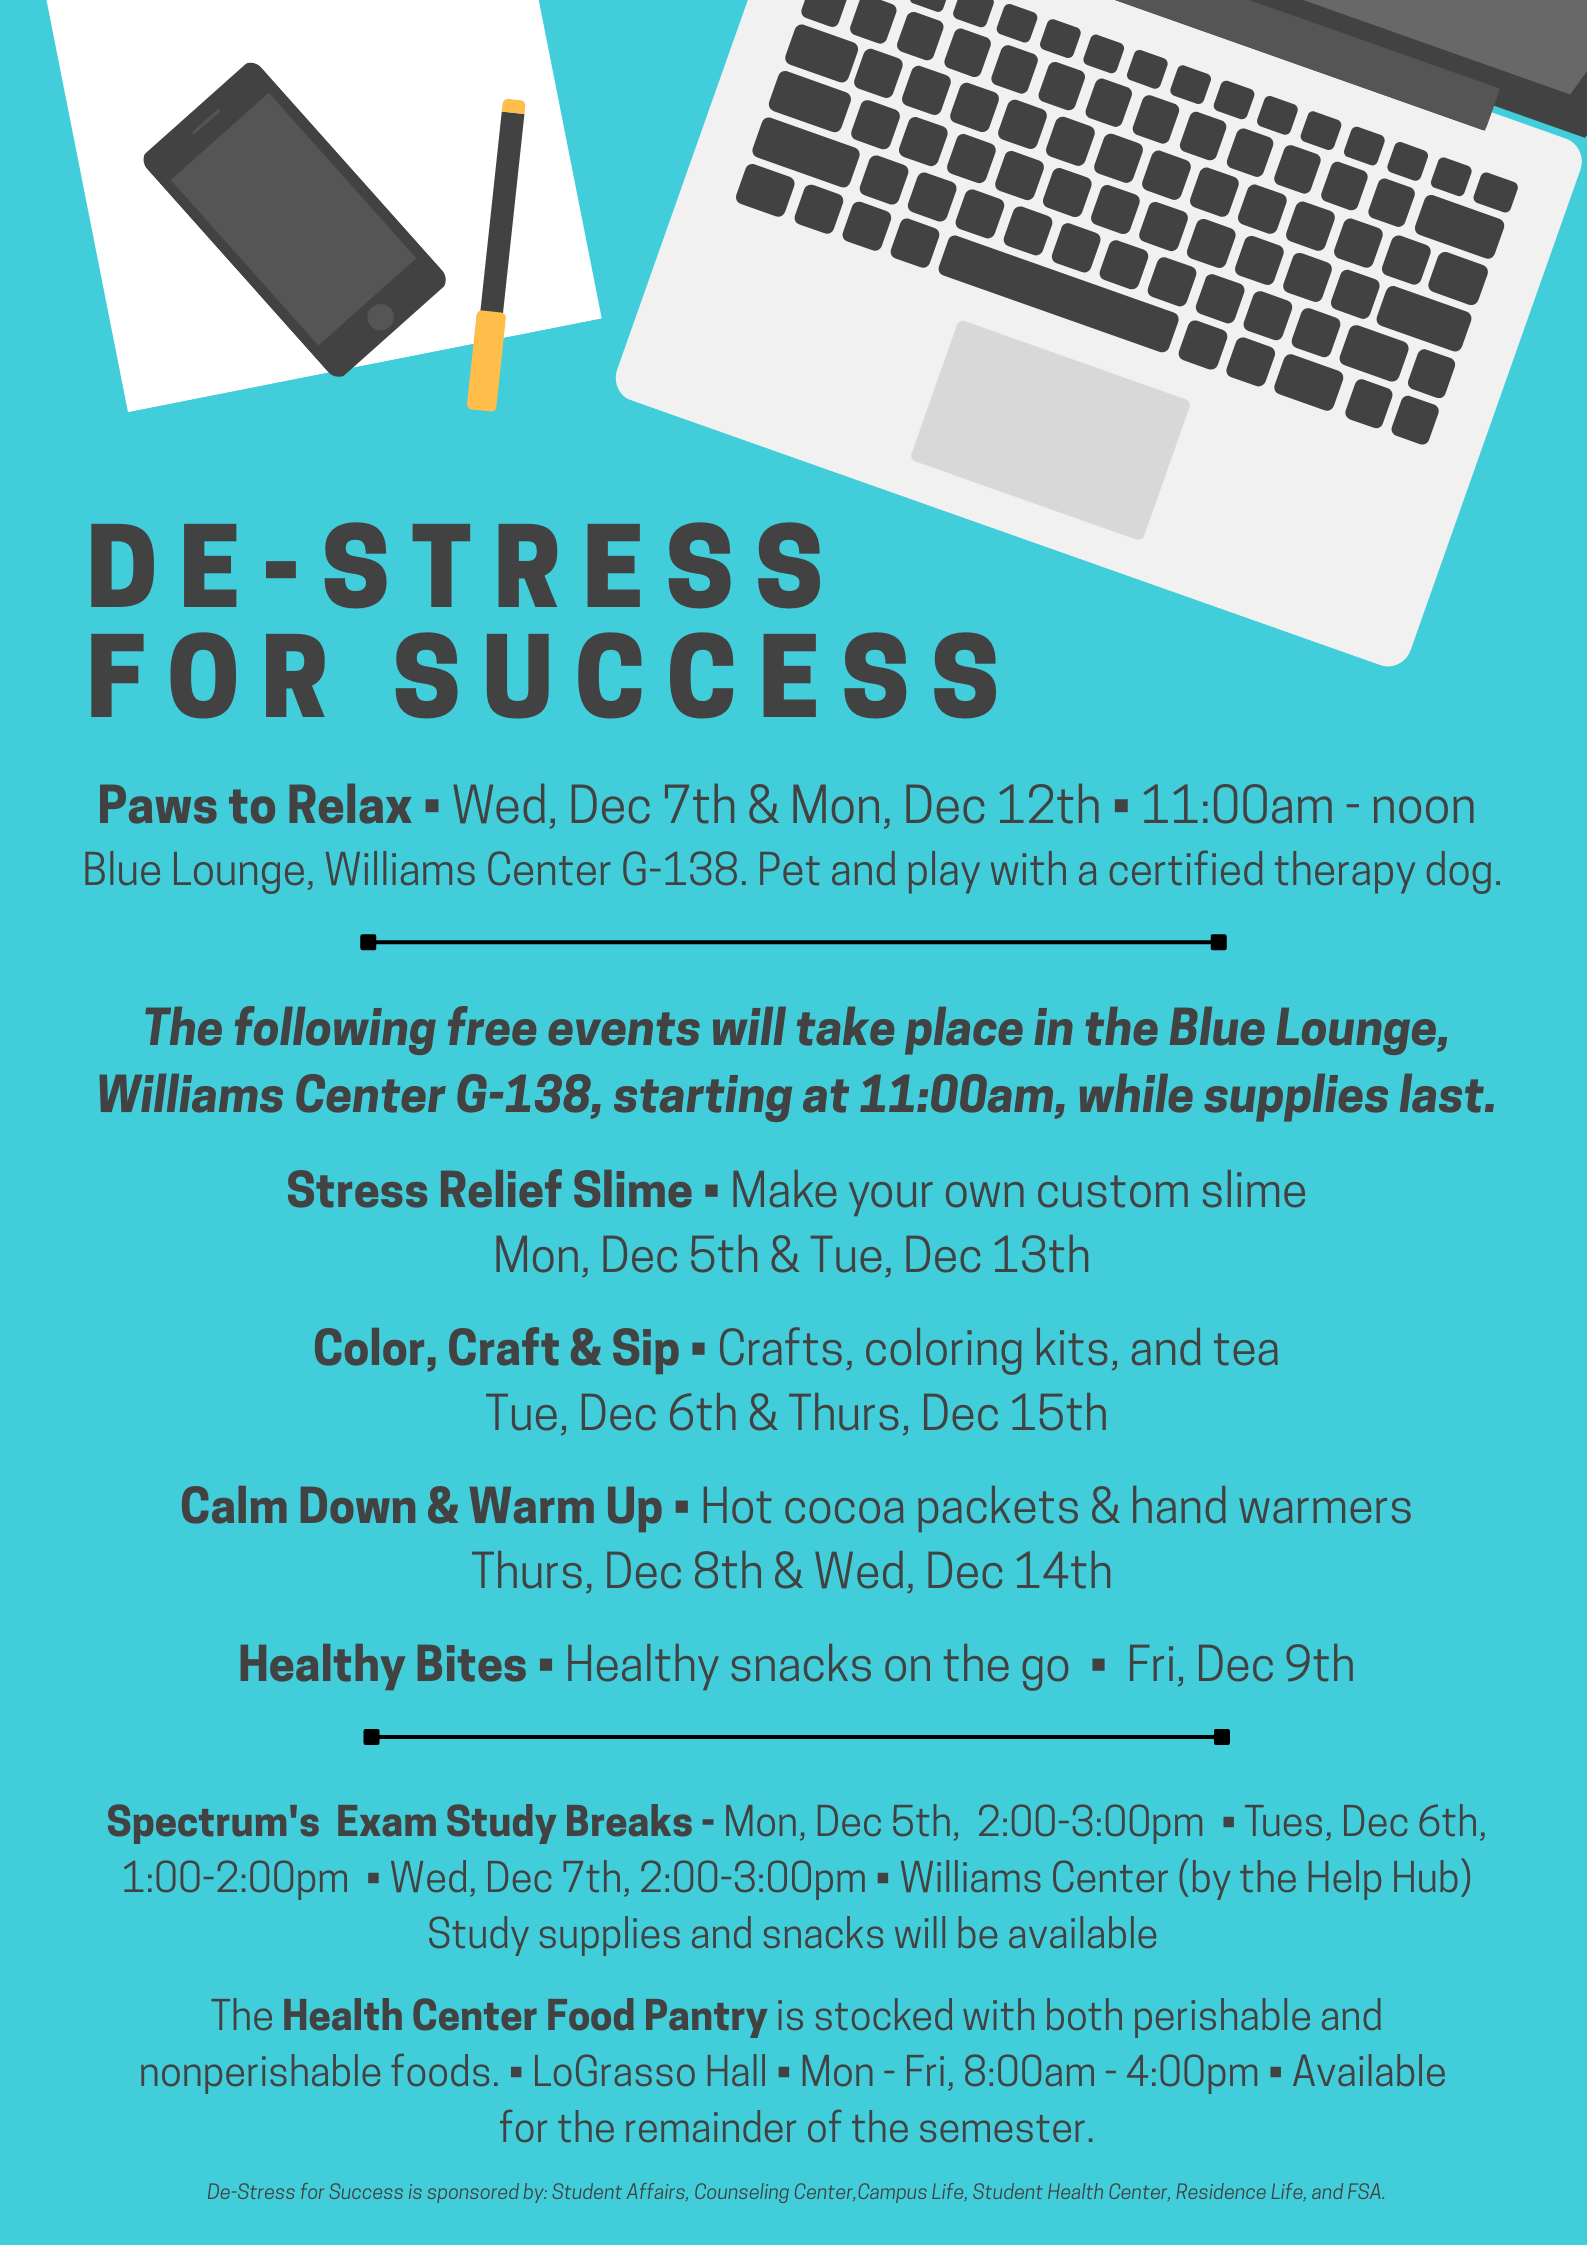 De-stress for Success